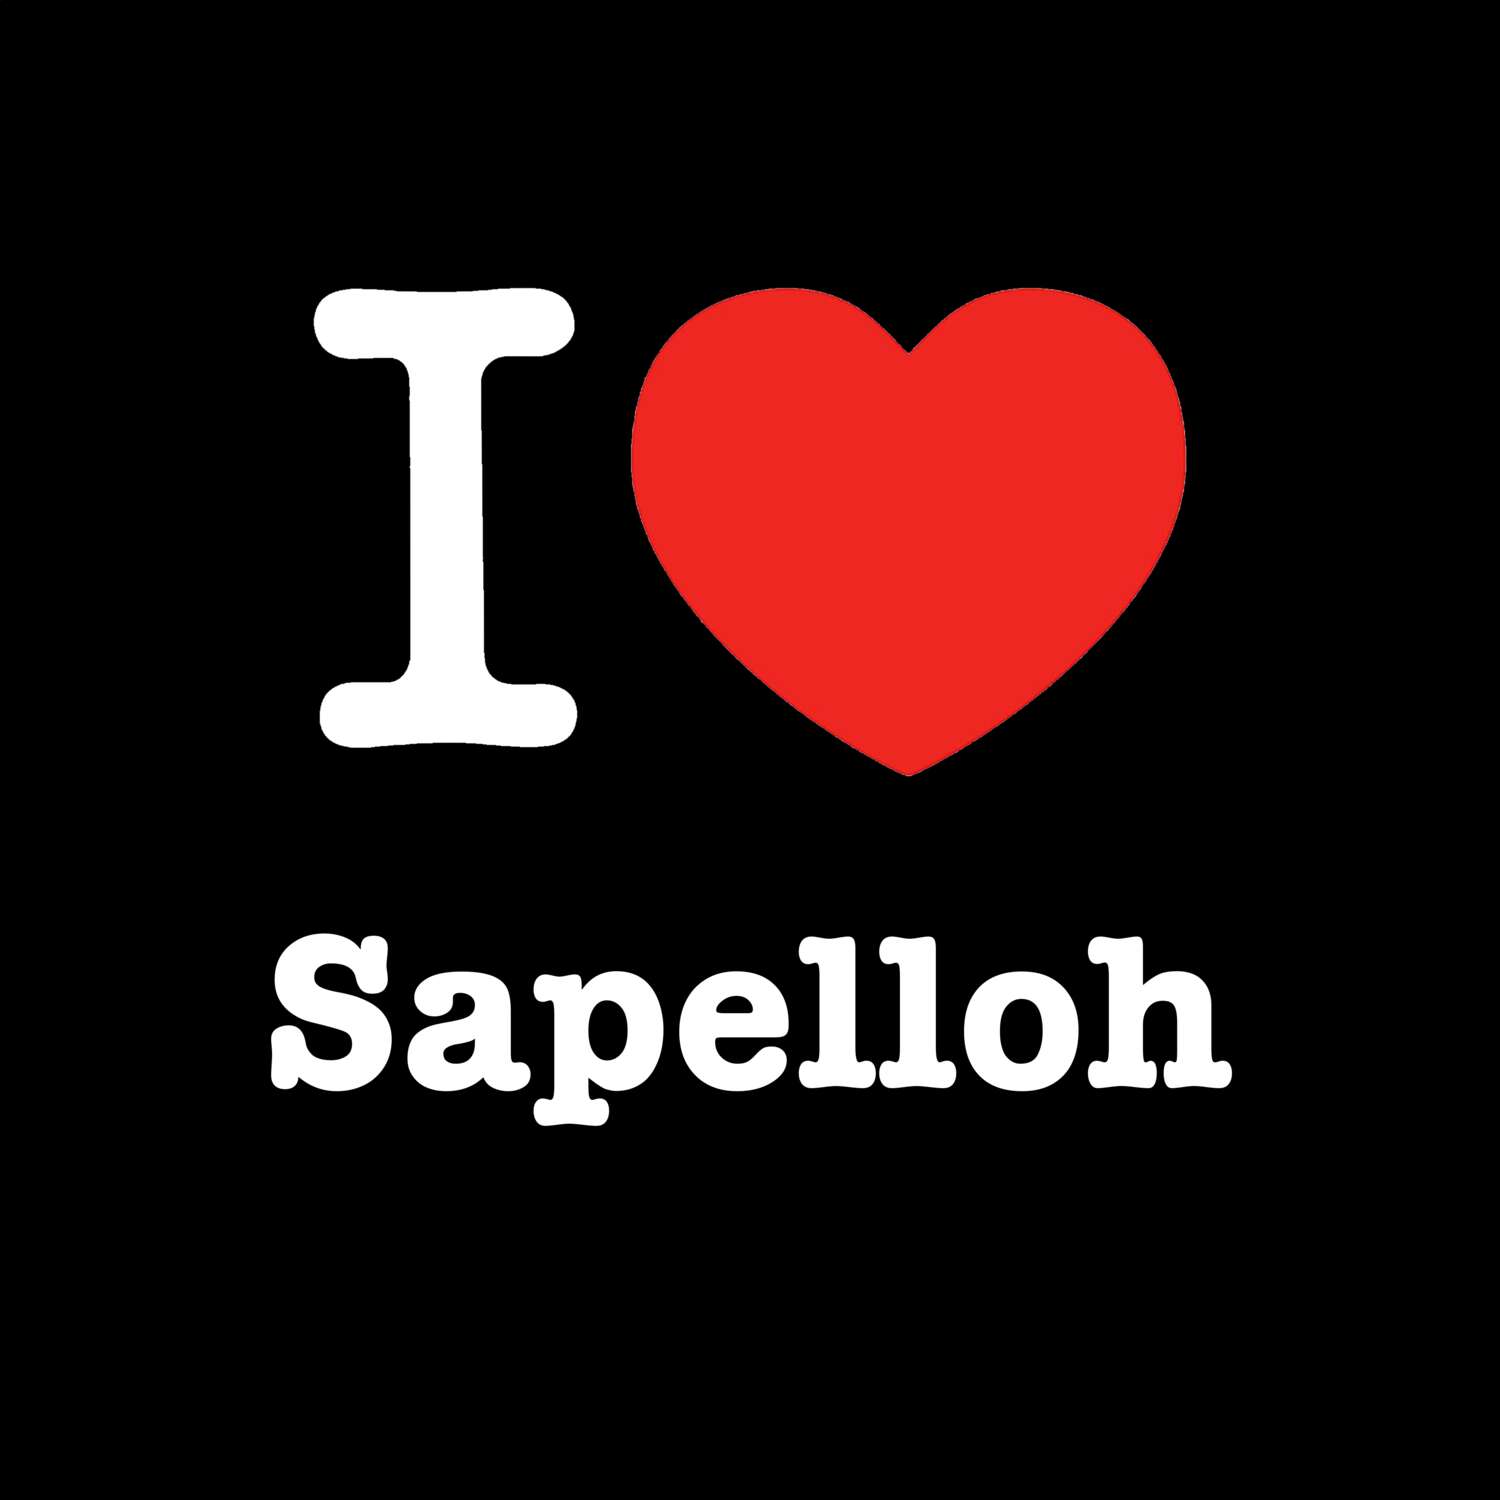 Sapelloh T-Shirt »I love«